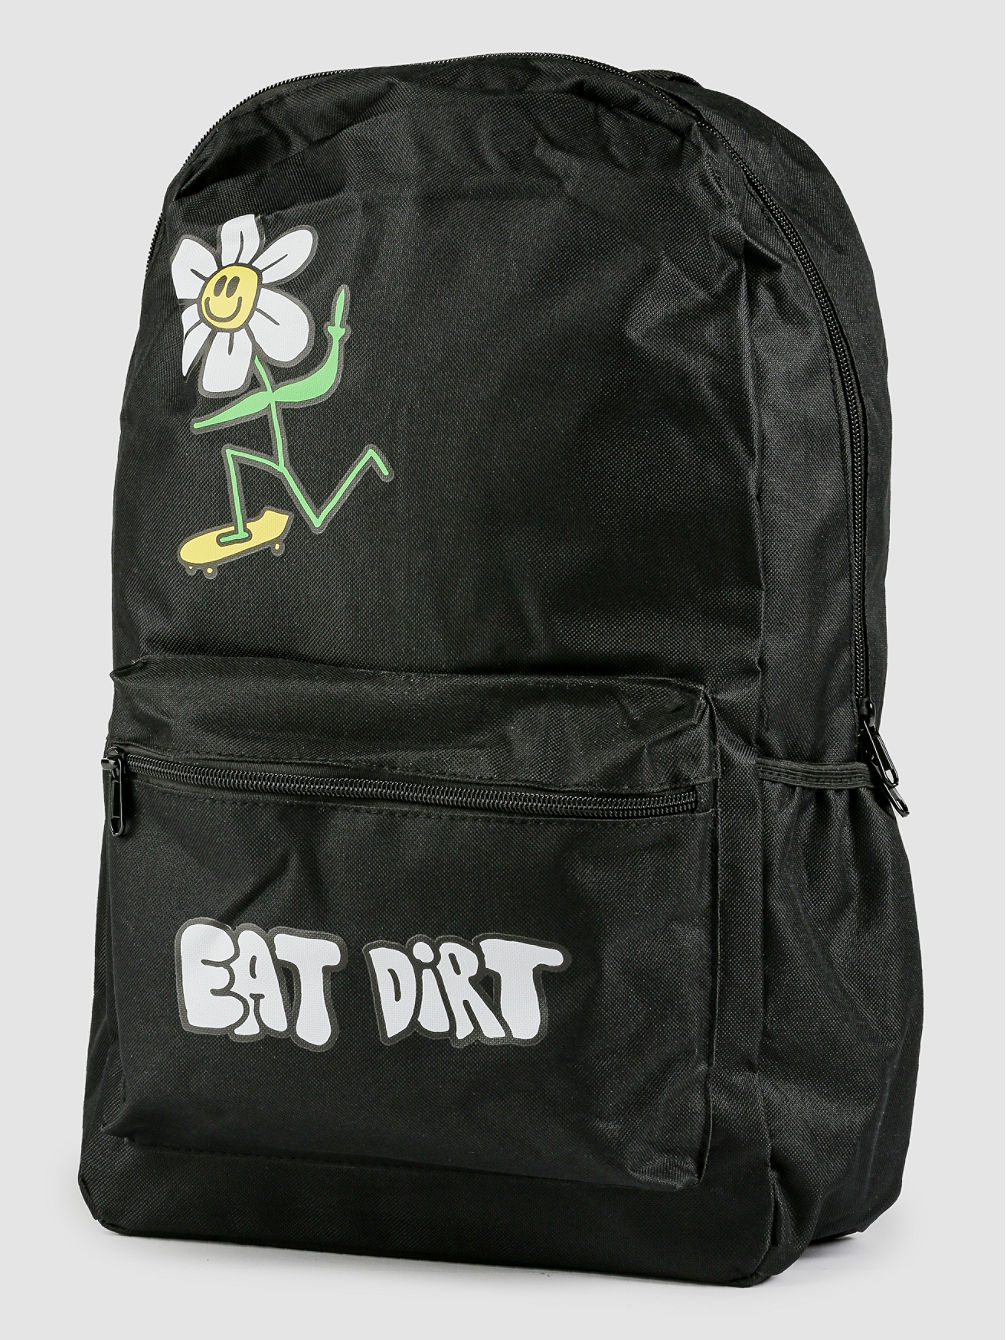 Eat Dirt Backpack